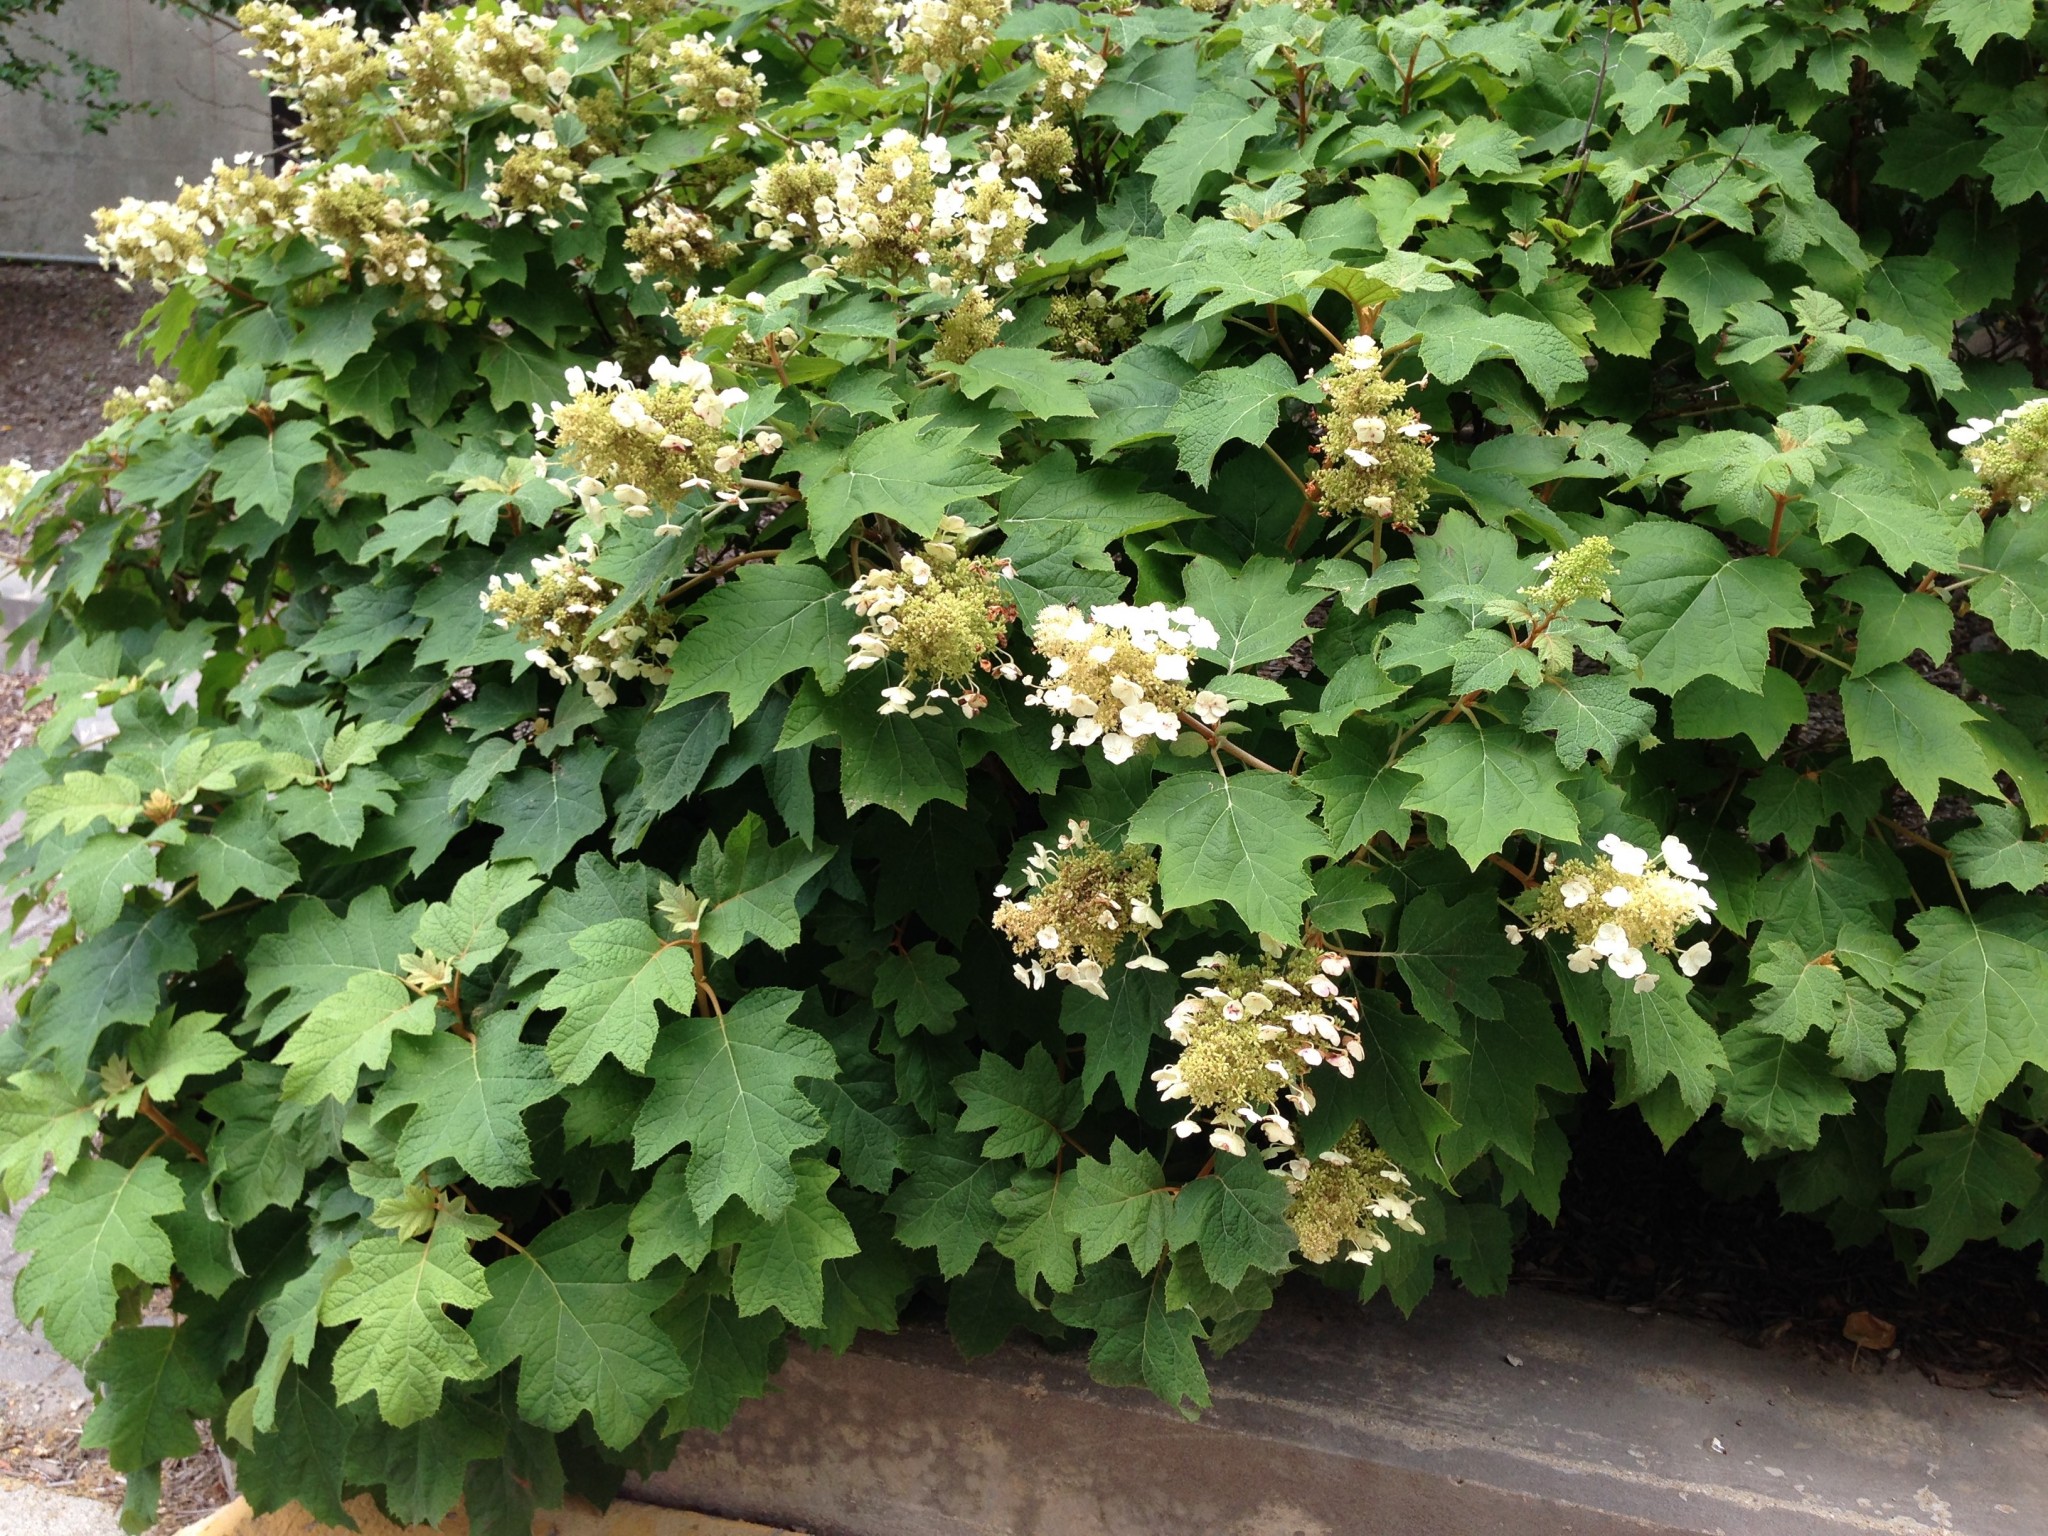 hydrangea purdue oakleaf confusing popular but rosie lerner extension credit sites